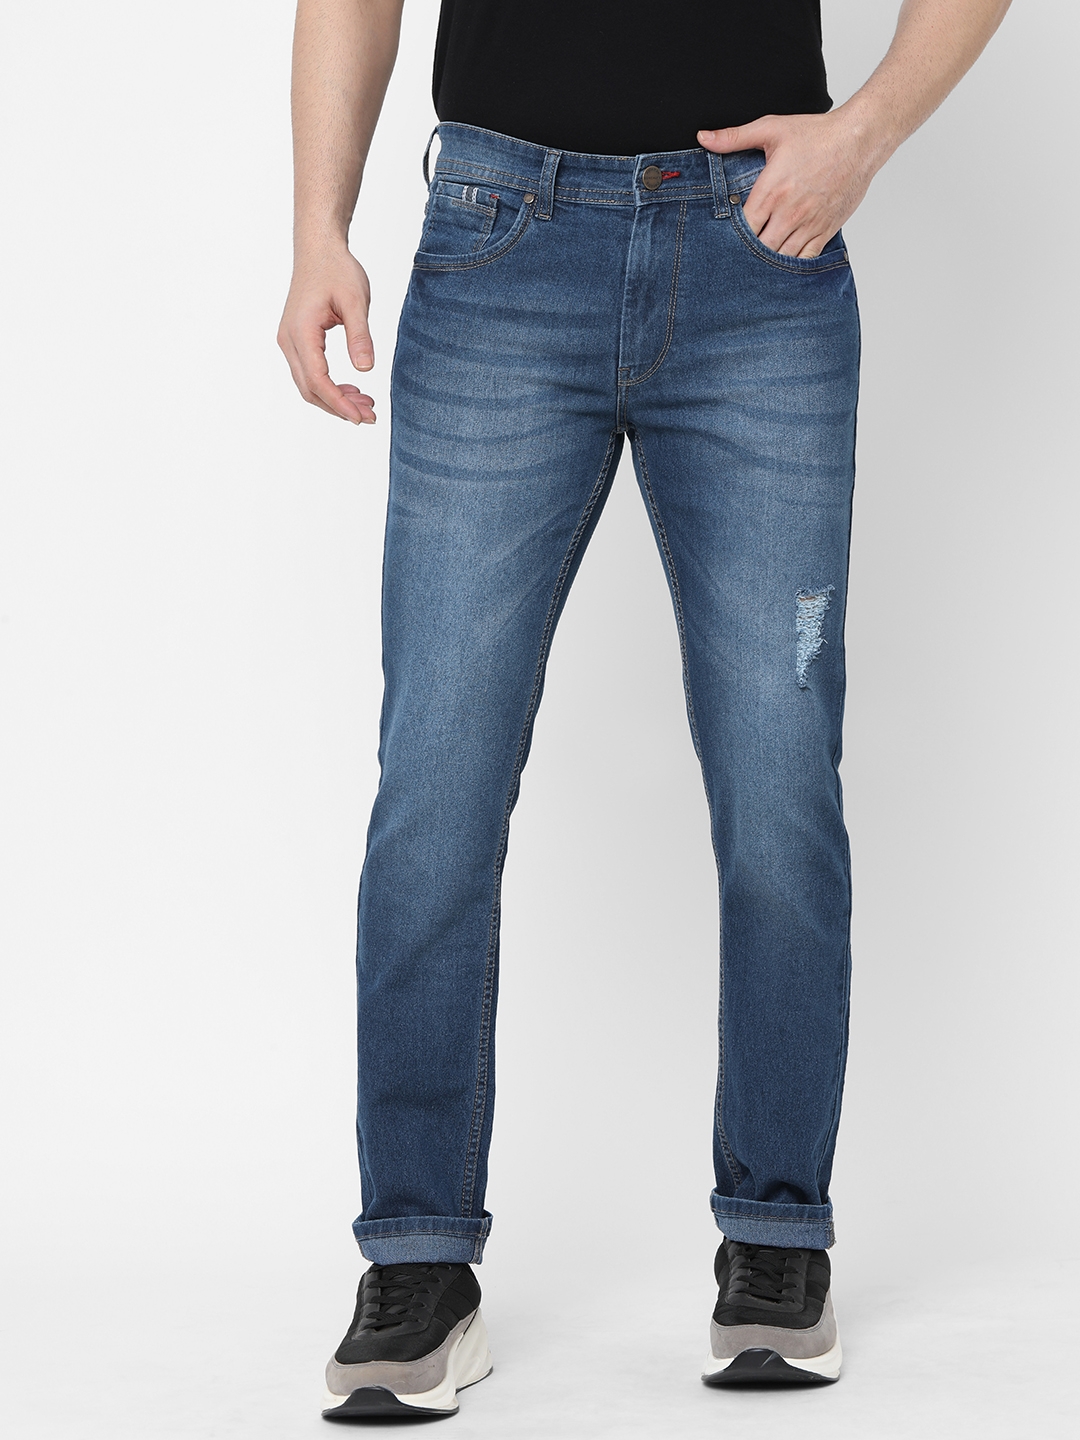 Men's Blue Cotton Ripped Jeans